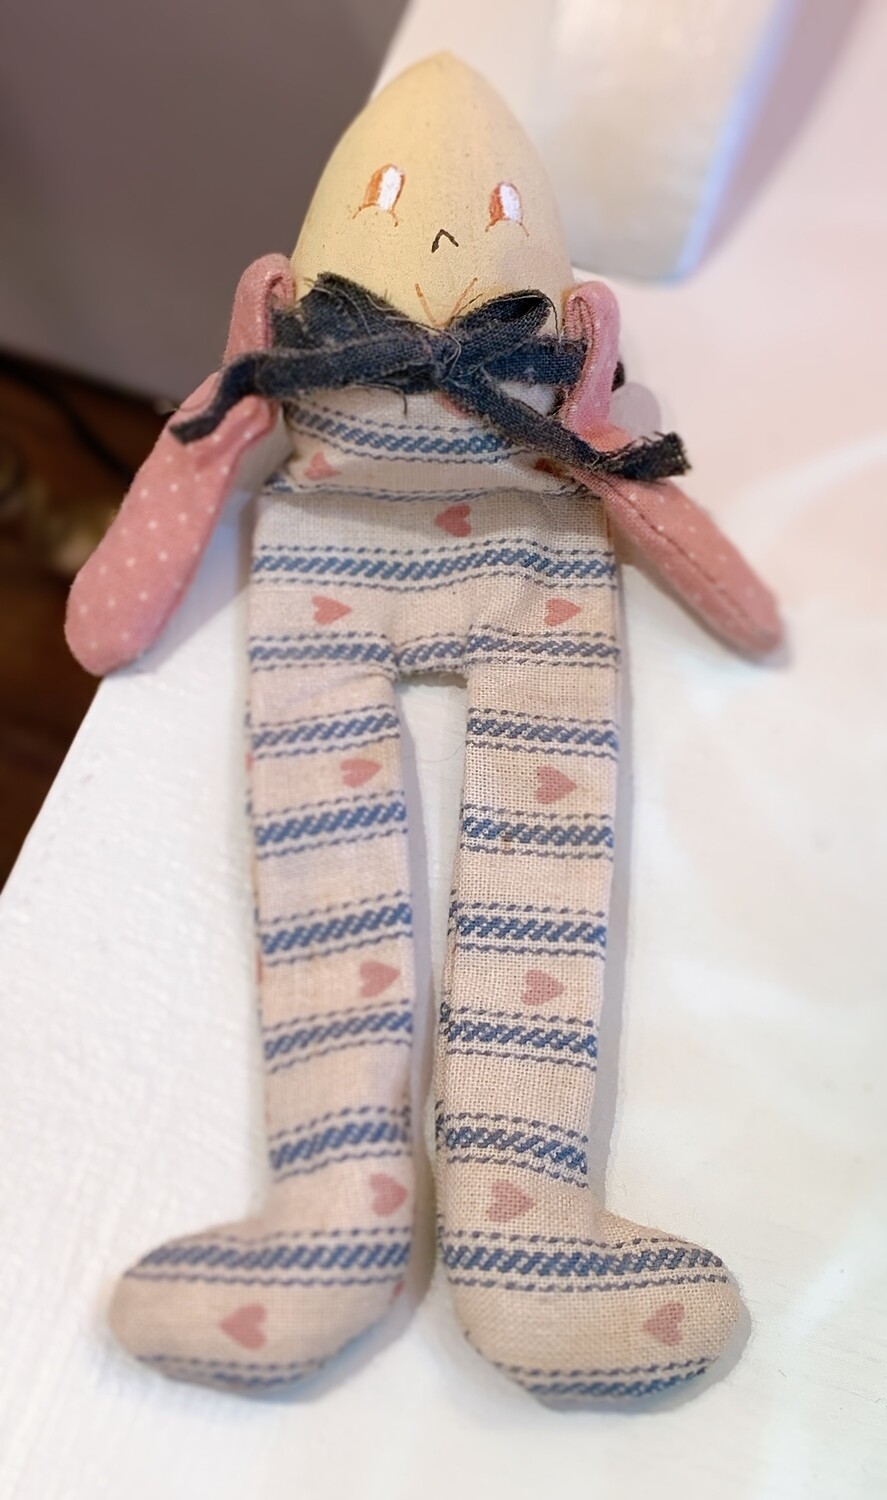 Humpty Dumpty Egg 1992 Handmade Fabric Cloth Doll 5”